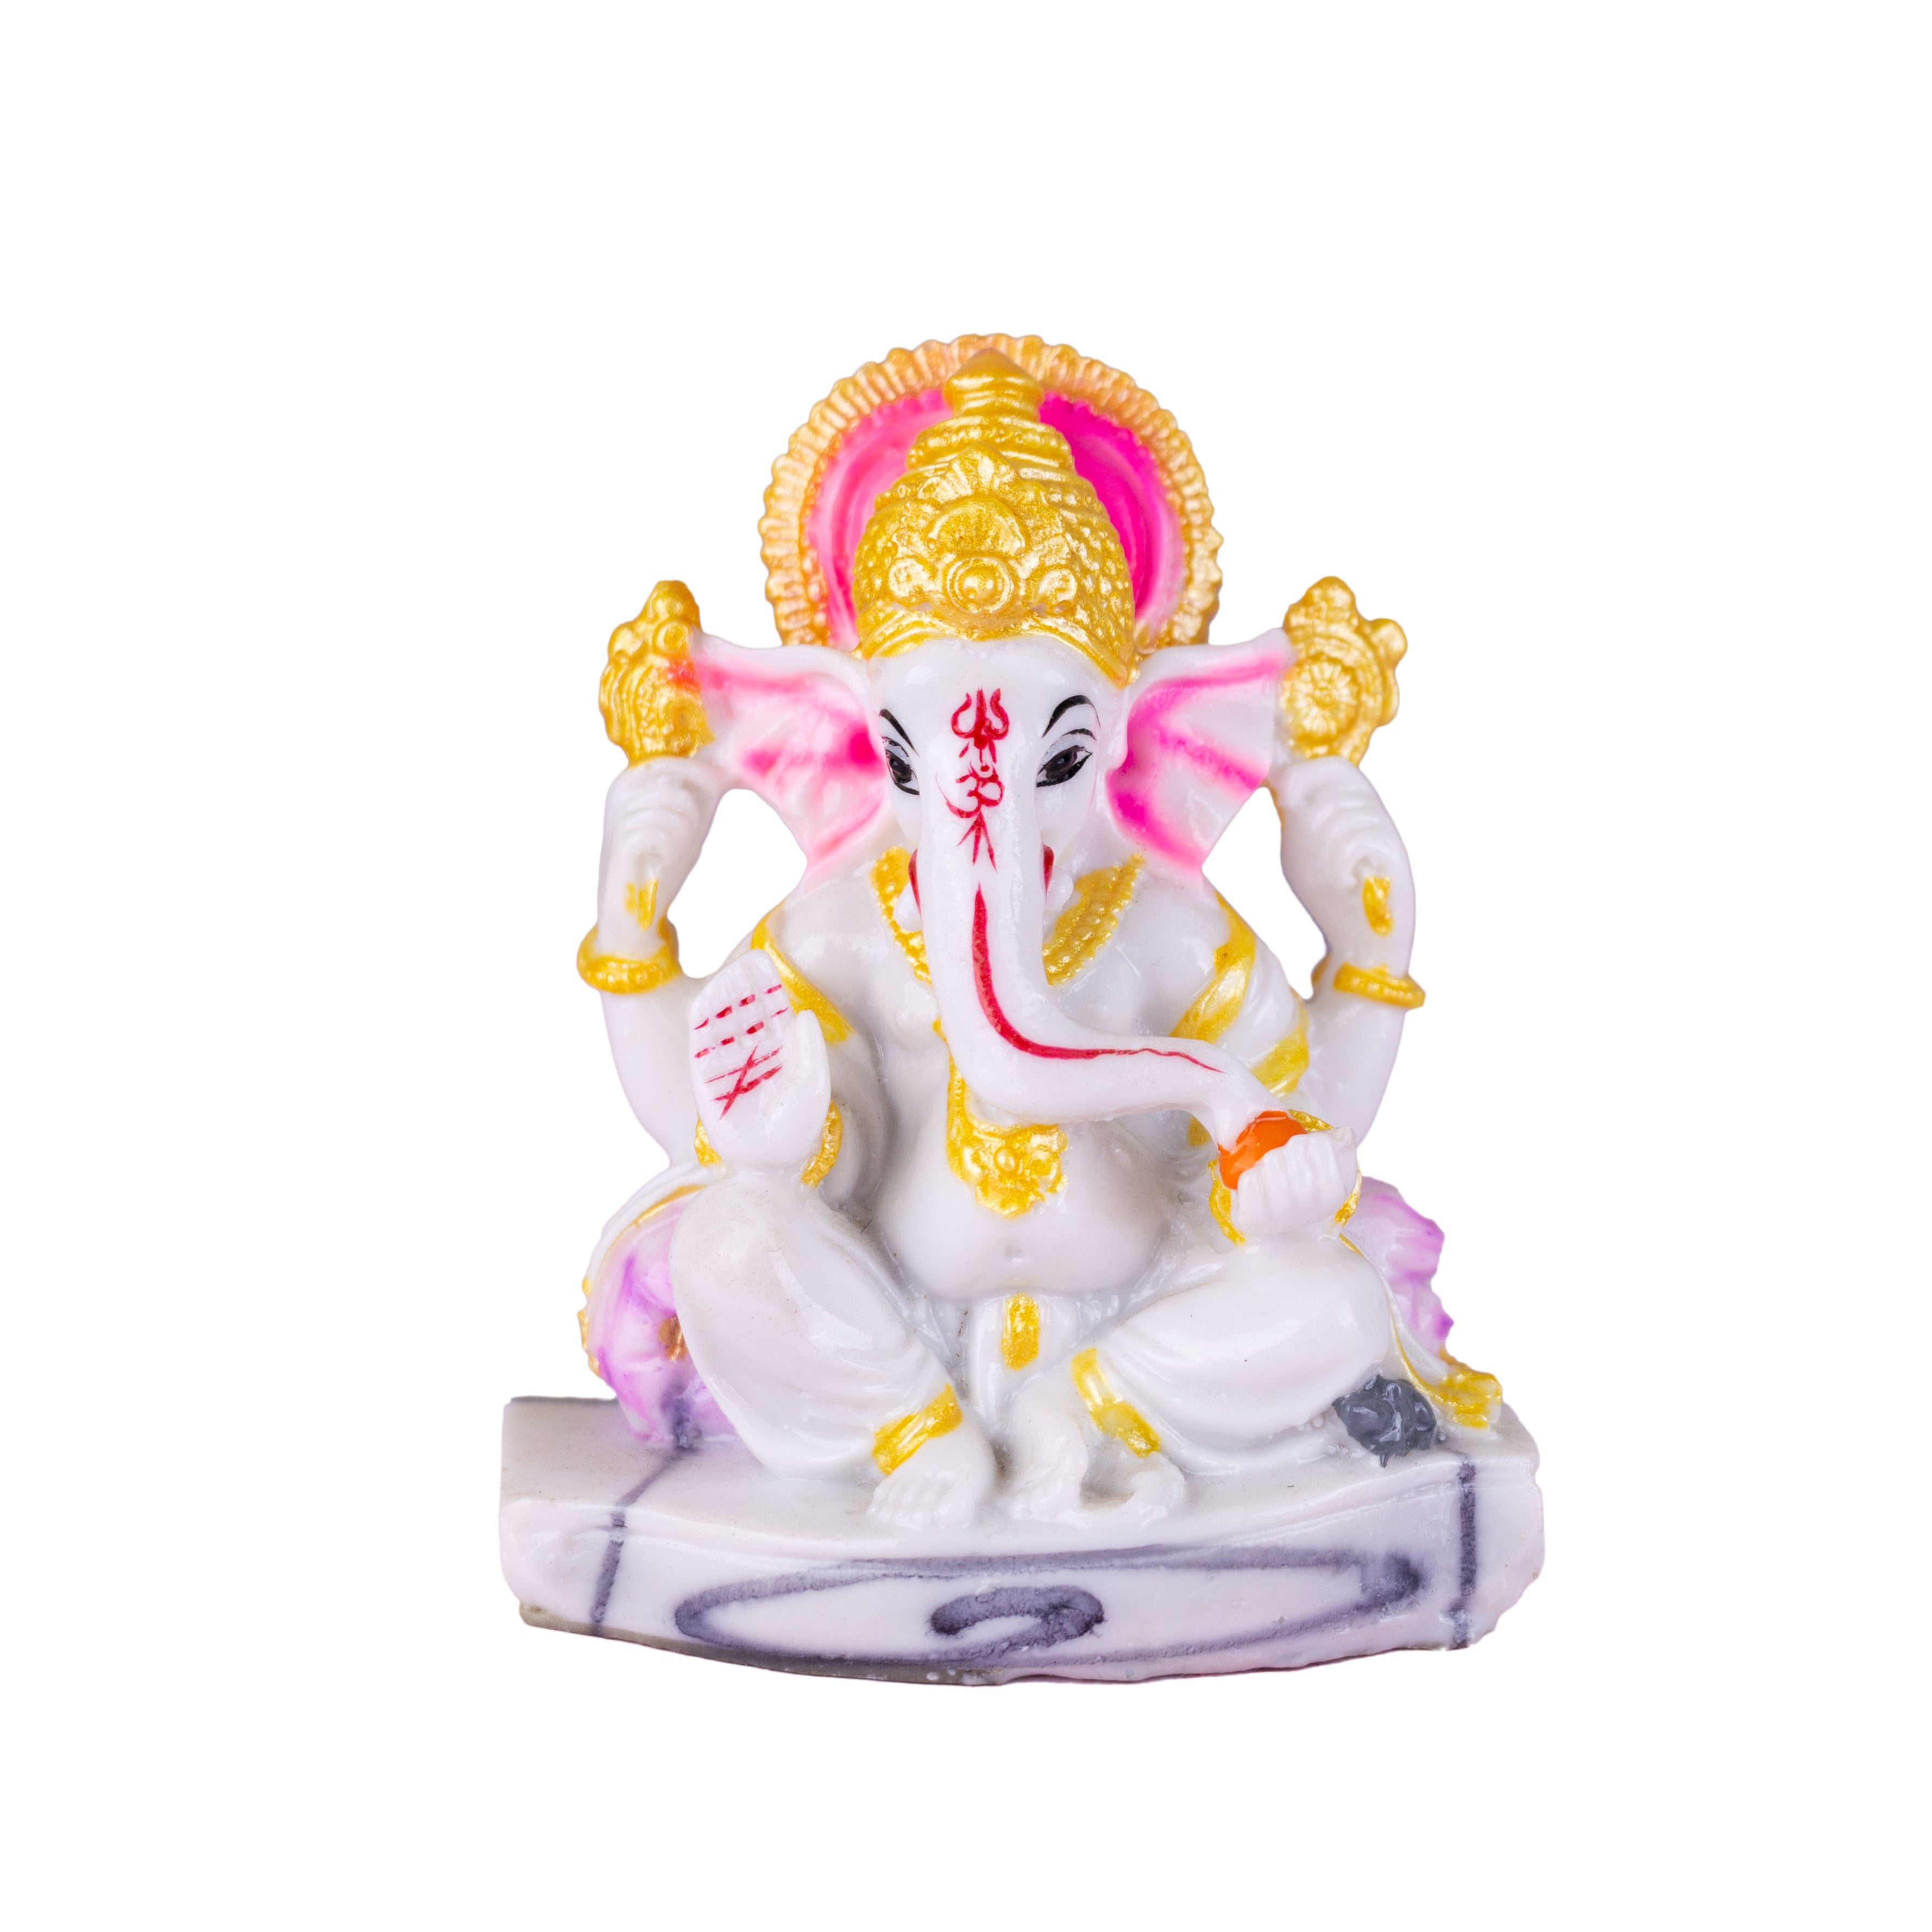 Ganesha small